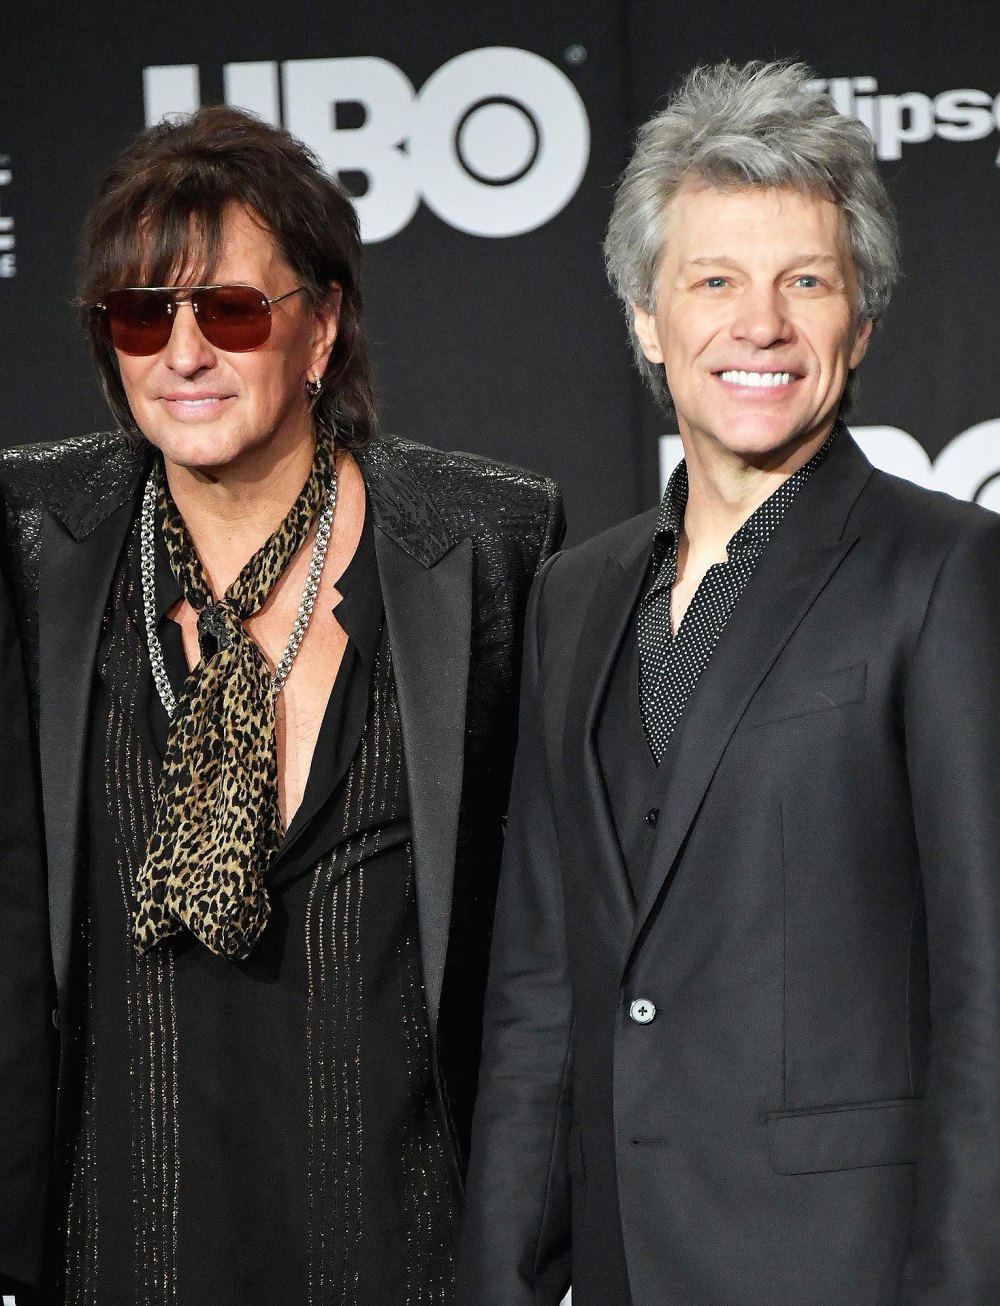 Jon Bon Jovi confirms he hasn't seen Richie Sambora in 11 years